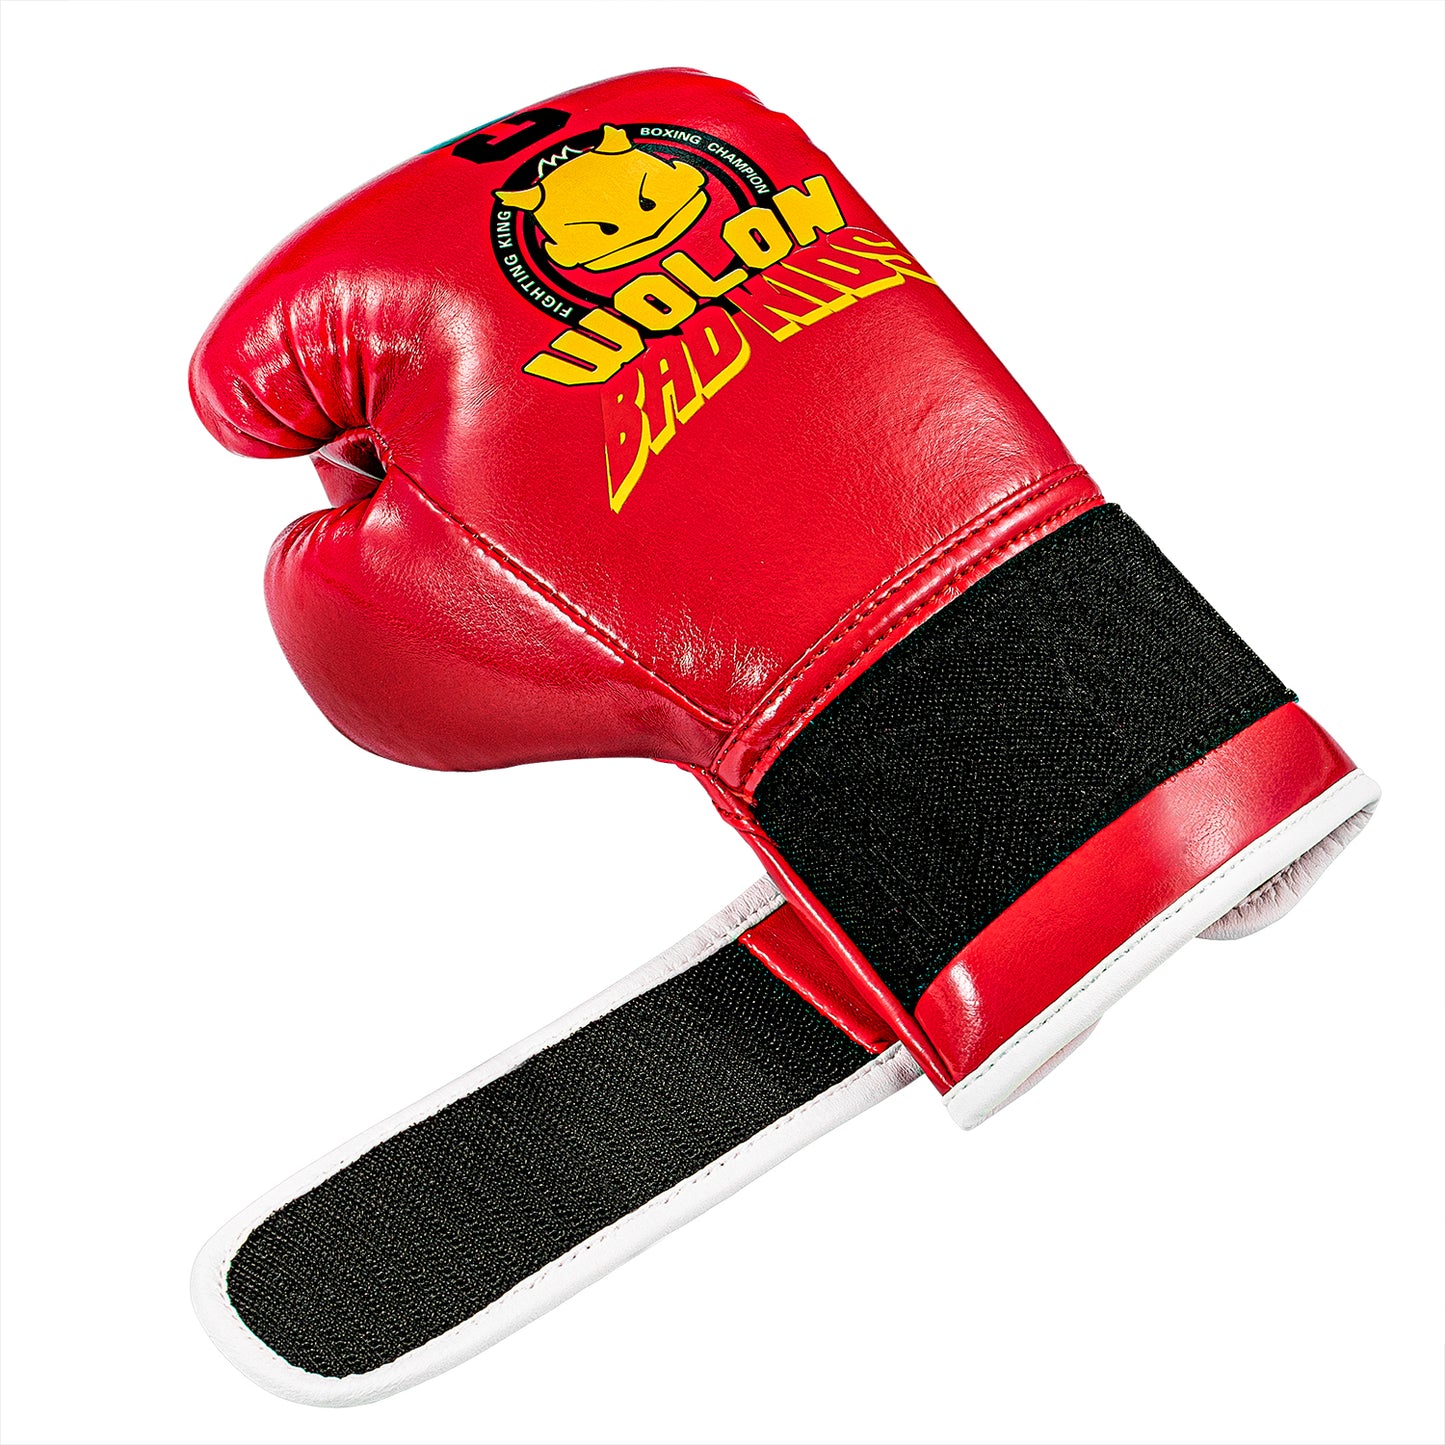 TEKXYZ Bad Kids Series Boxing Gloves - 6oz